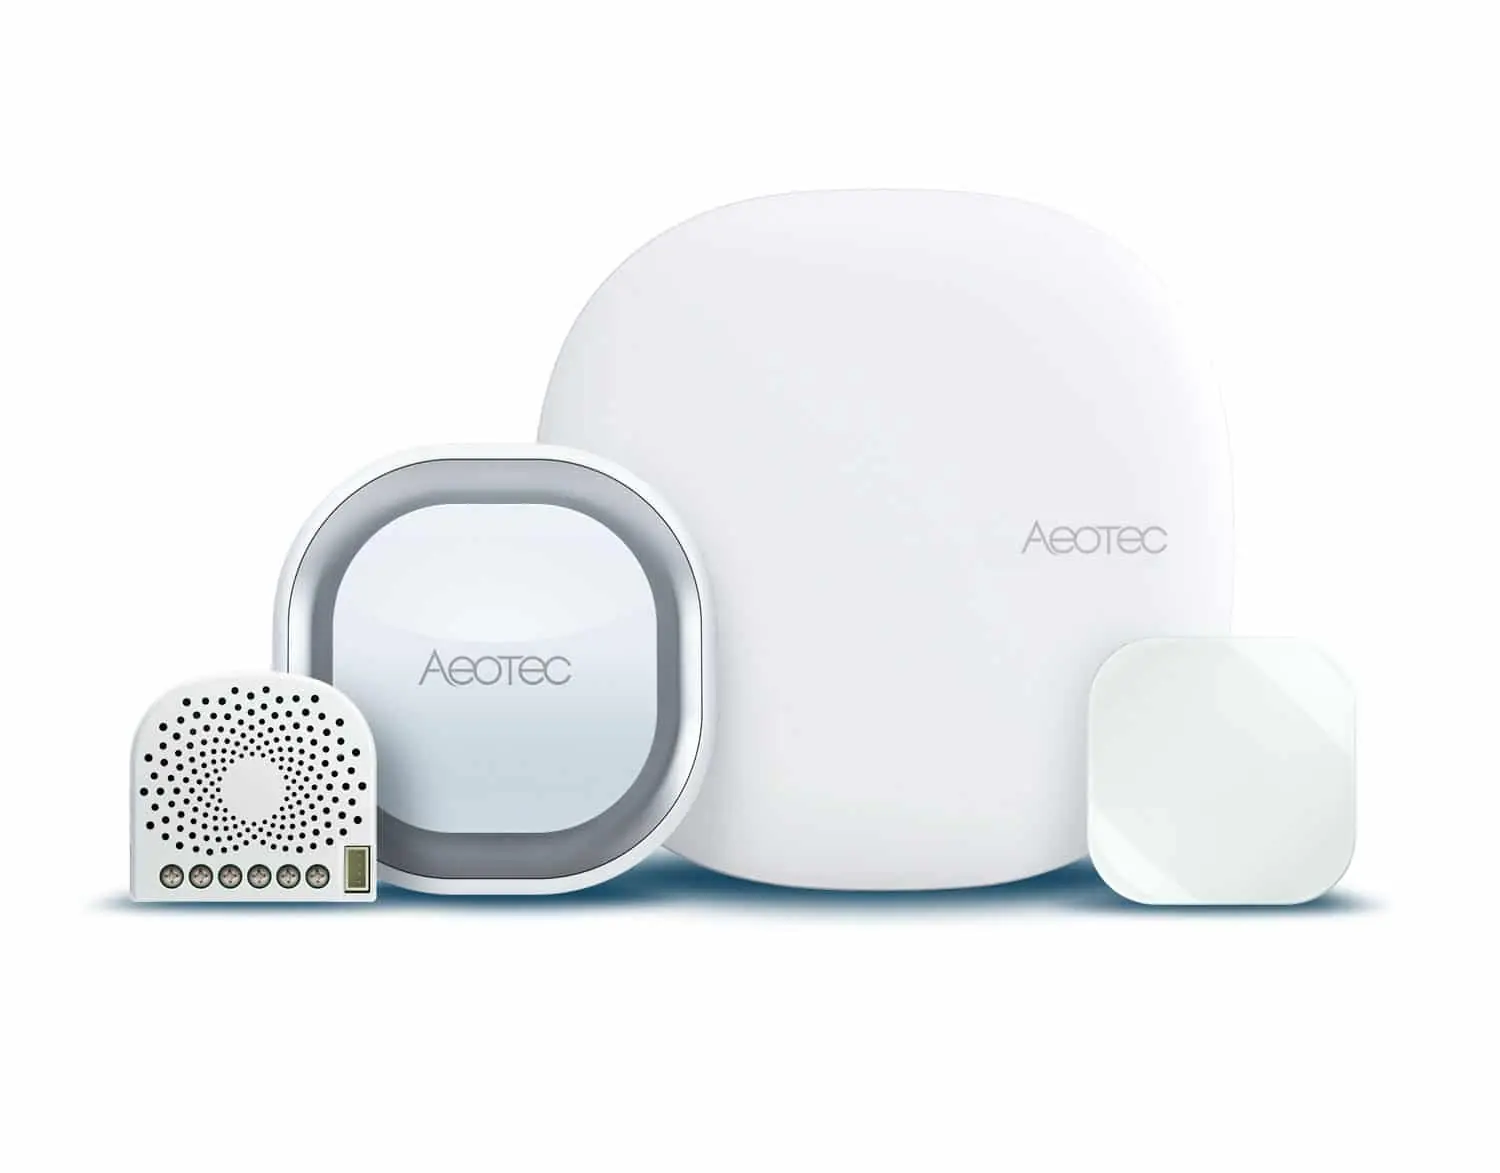 Aeotec smart home hub